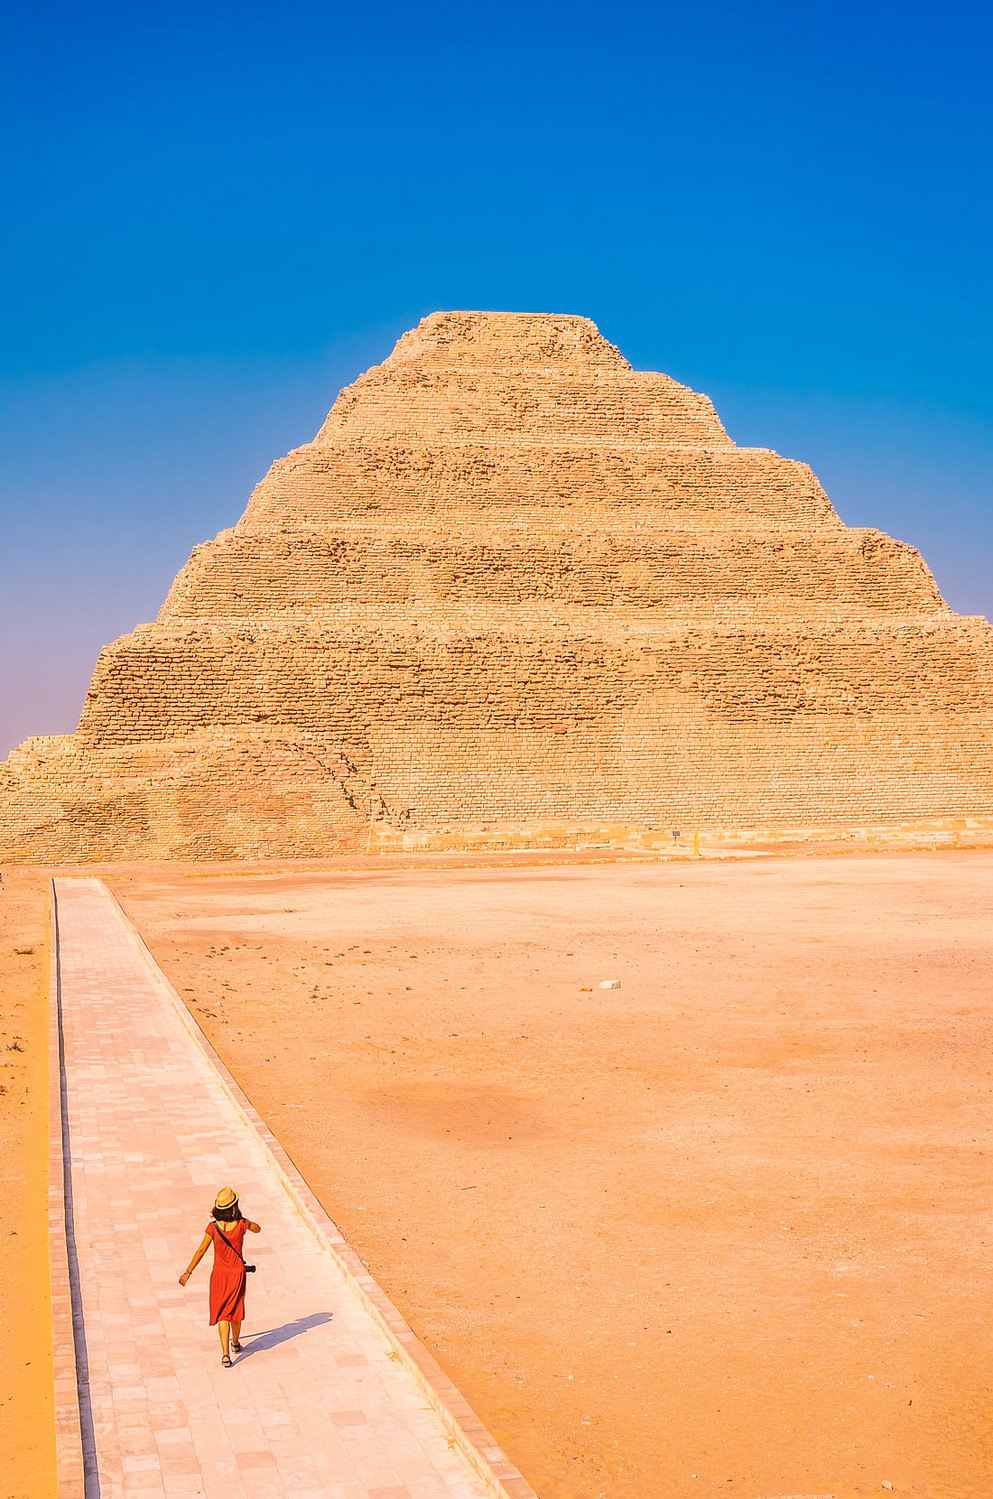 Visiting Egypt in February